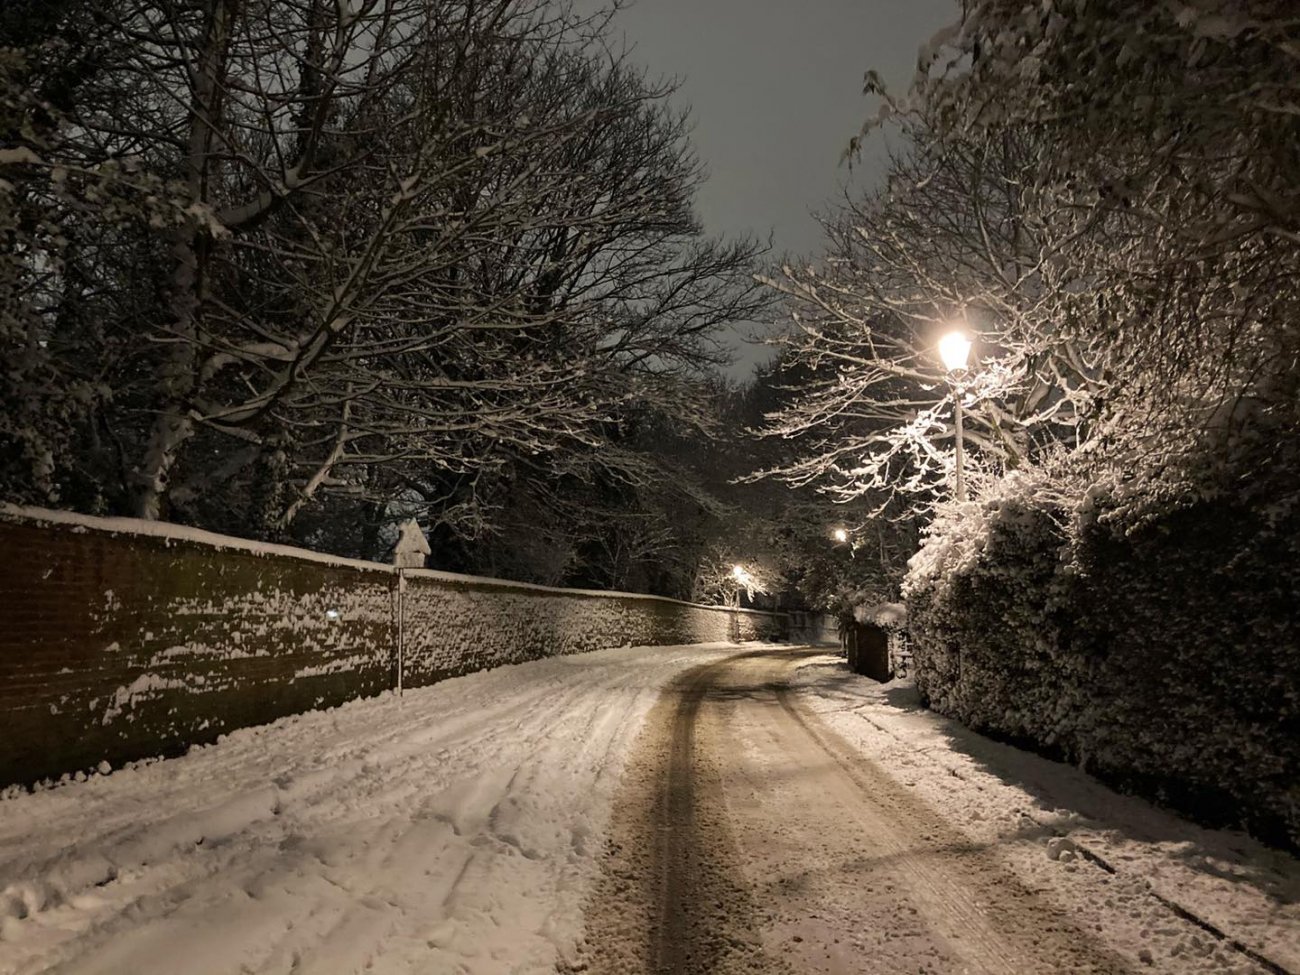 Photograph of Snowy Spondon Nights - Chapel Street looking towards Church Street/Locko Road